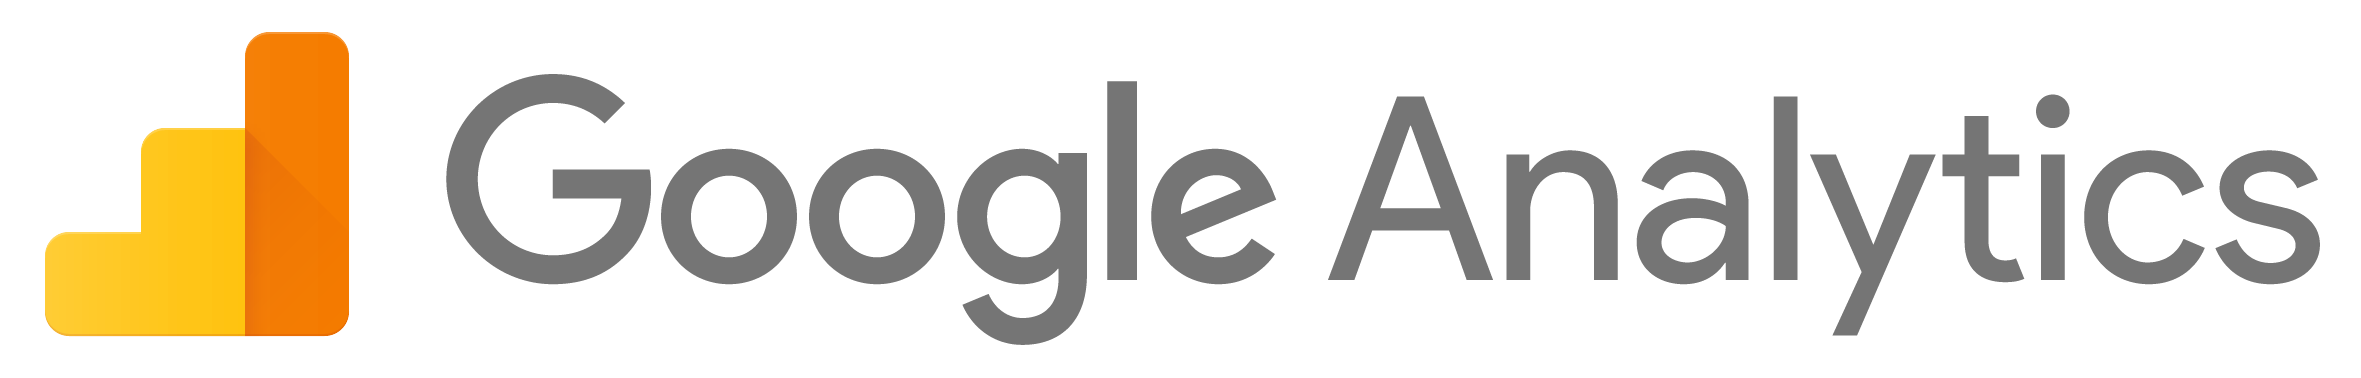 google analytics agencia de marketing digital amarilio